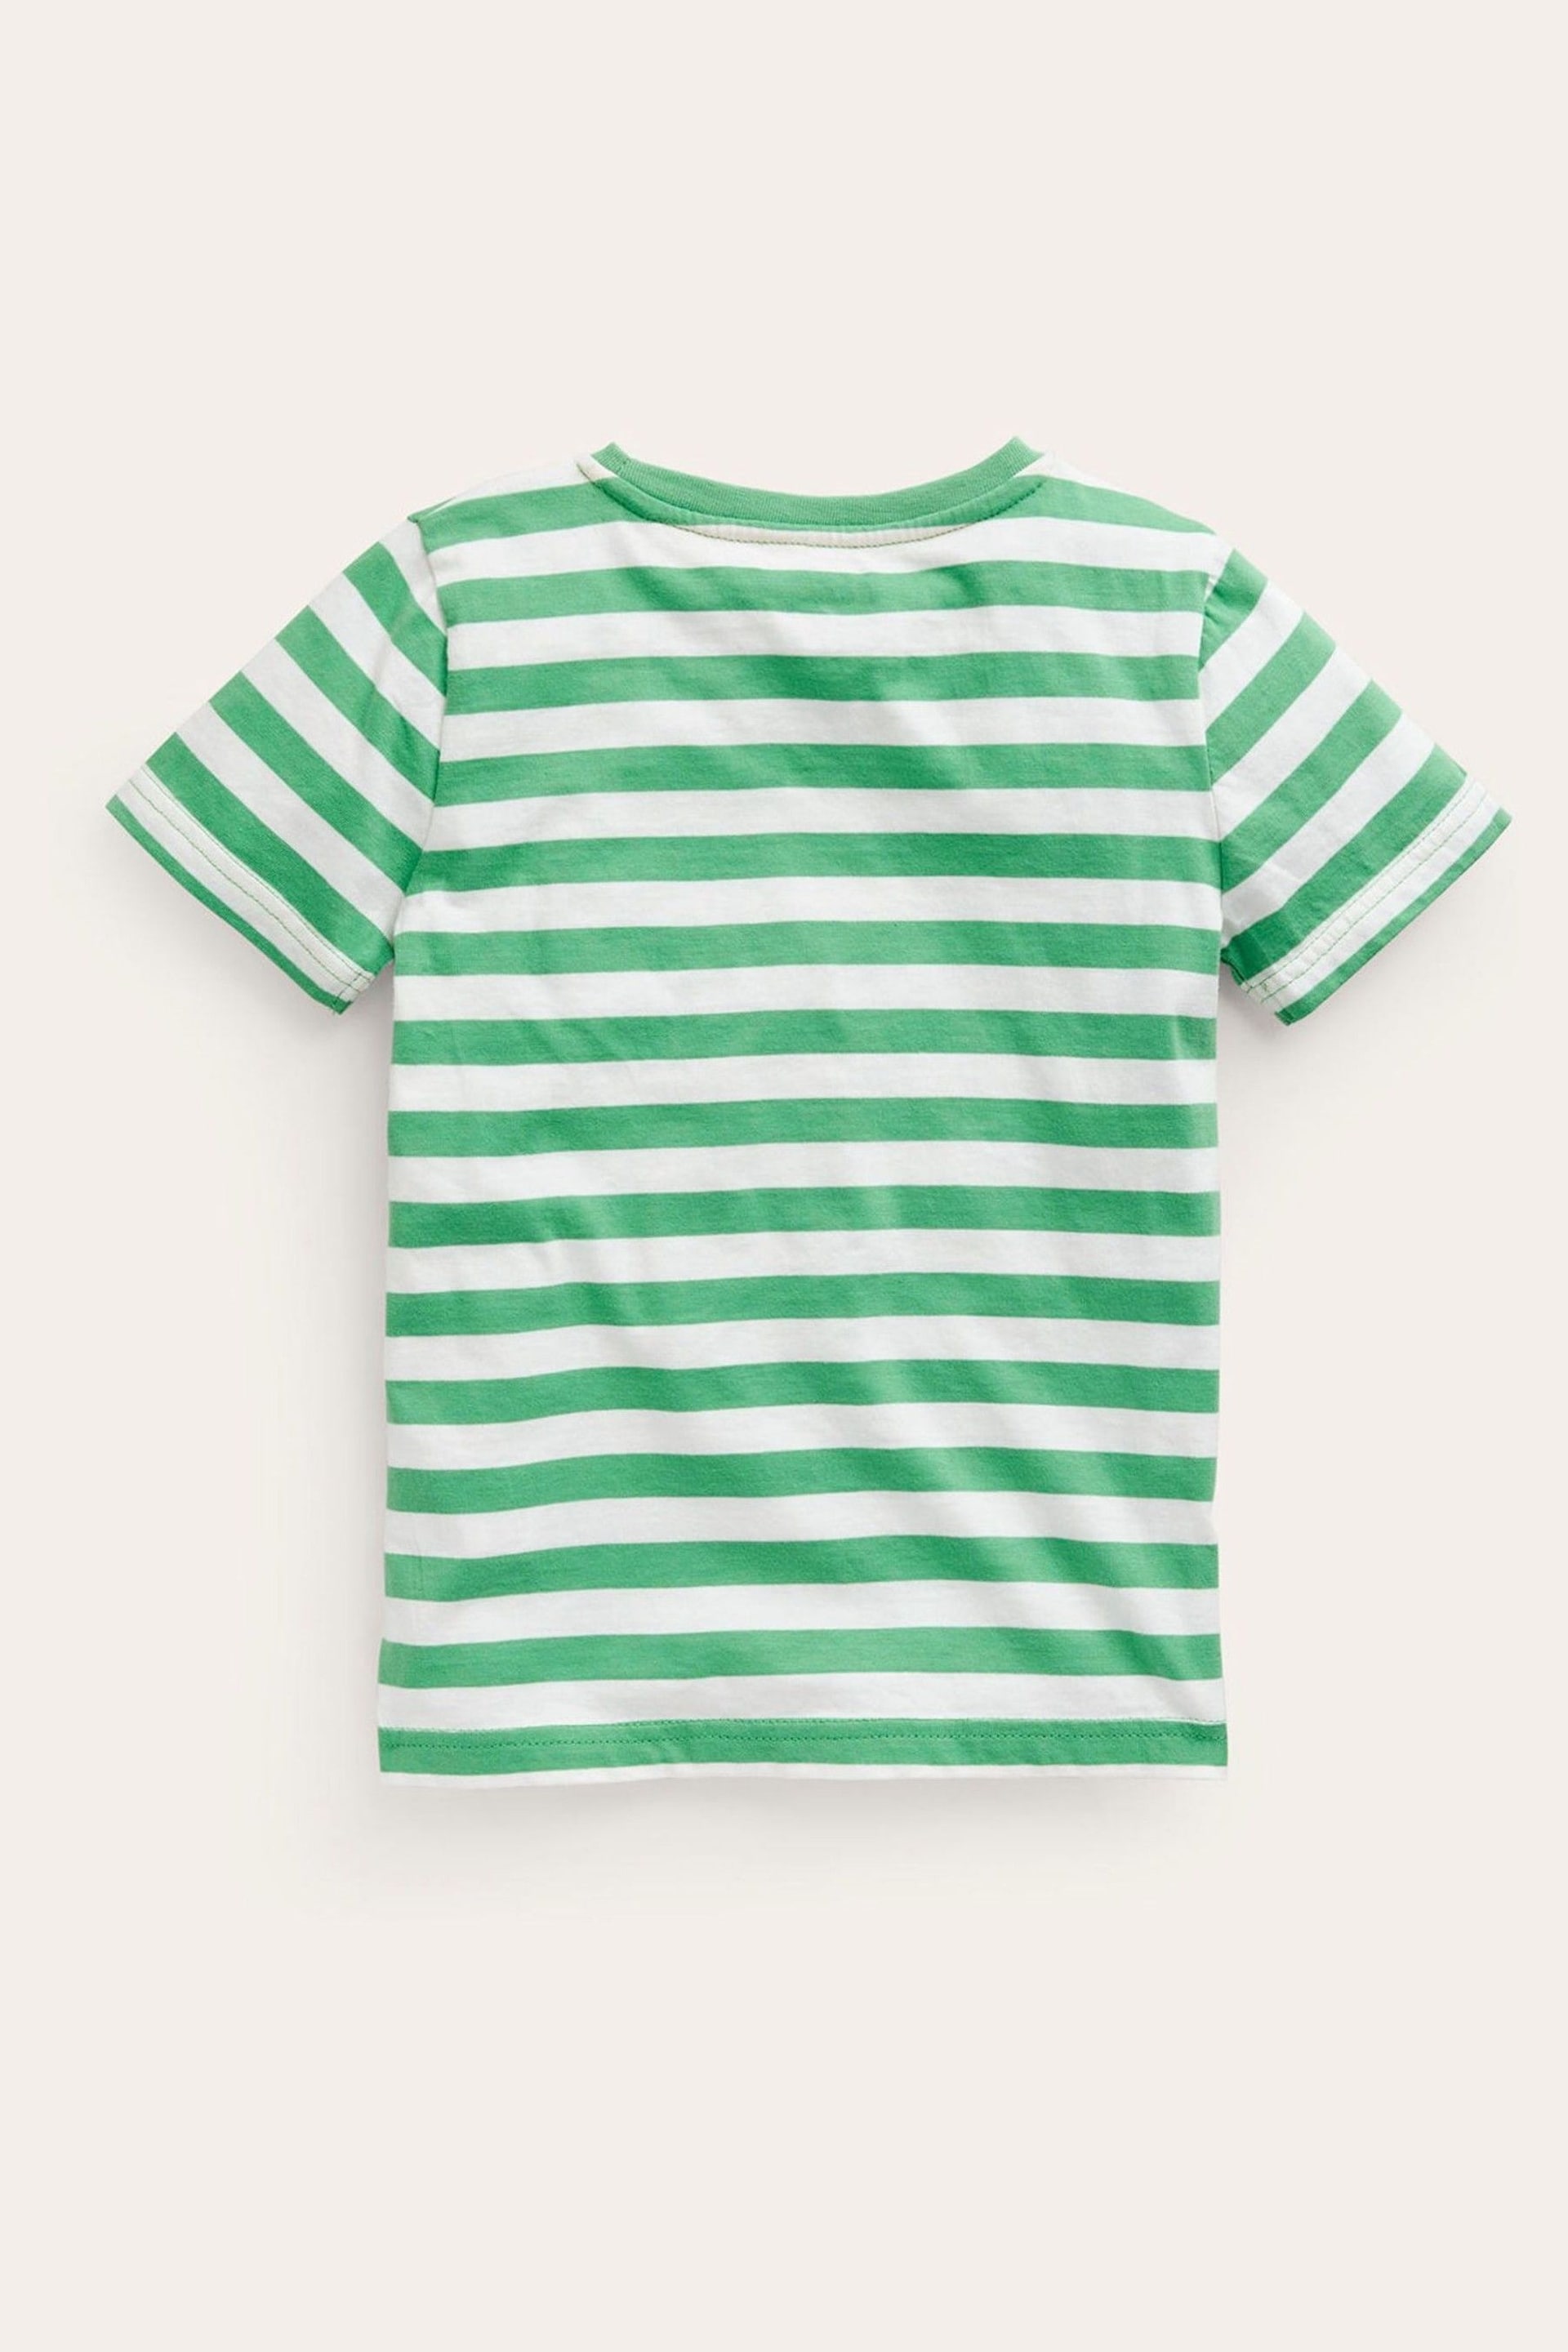 Boden Green Easter Appliqué T-shirt - Image 2 of 3